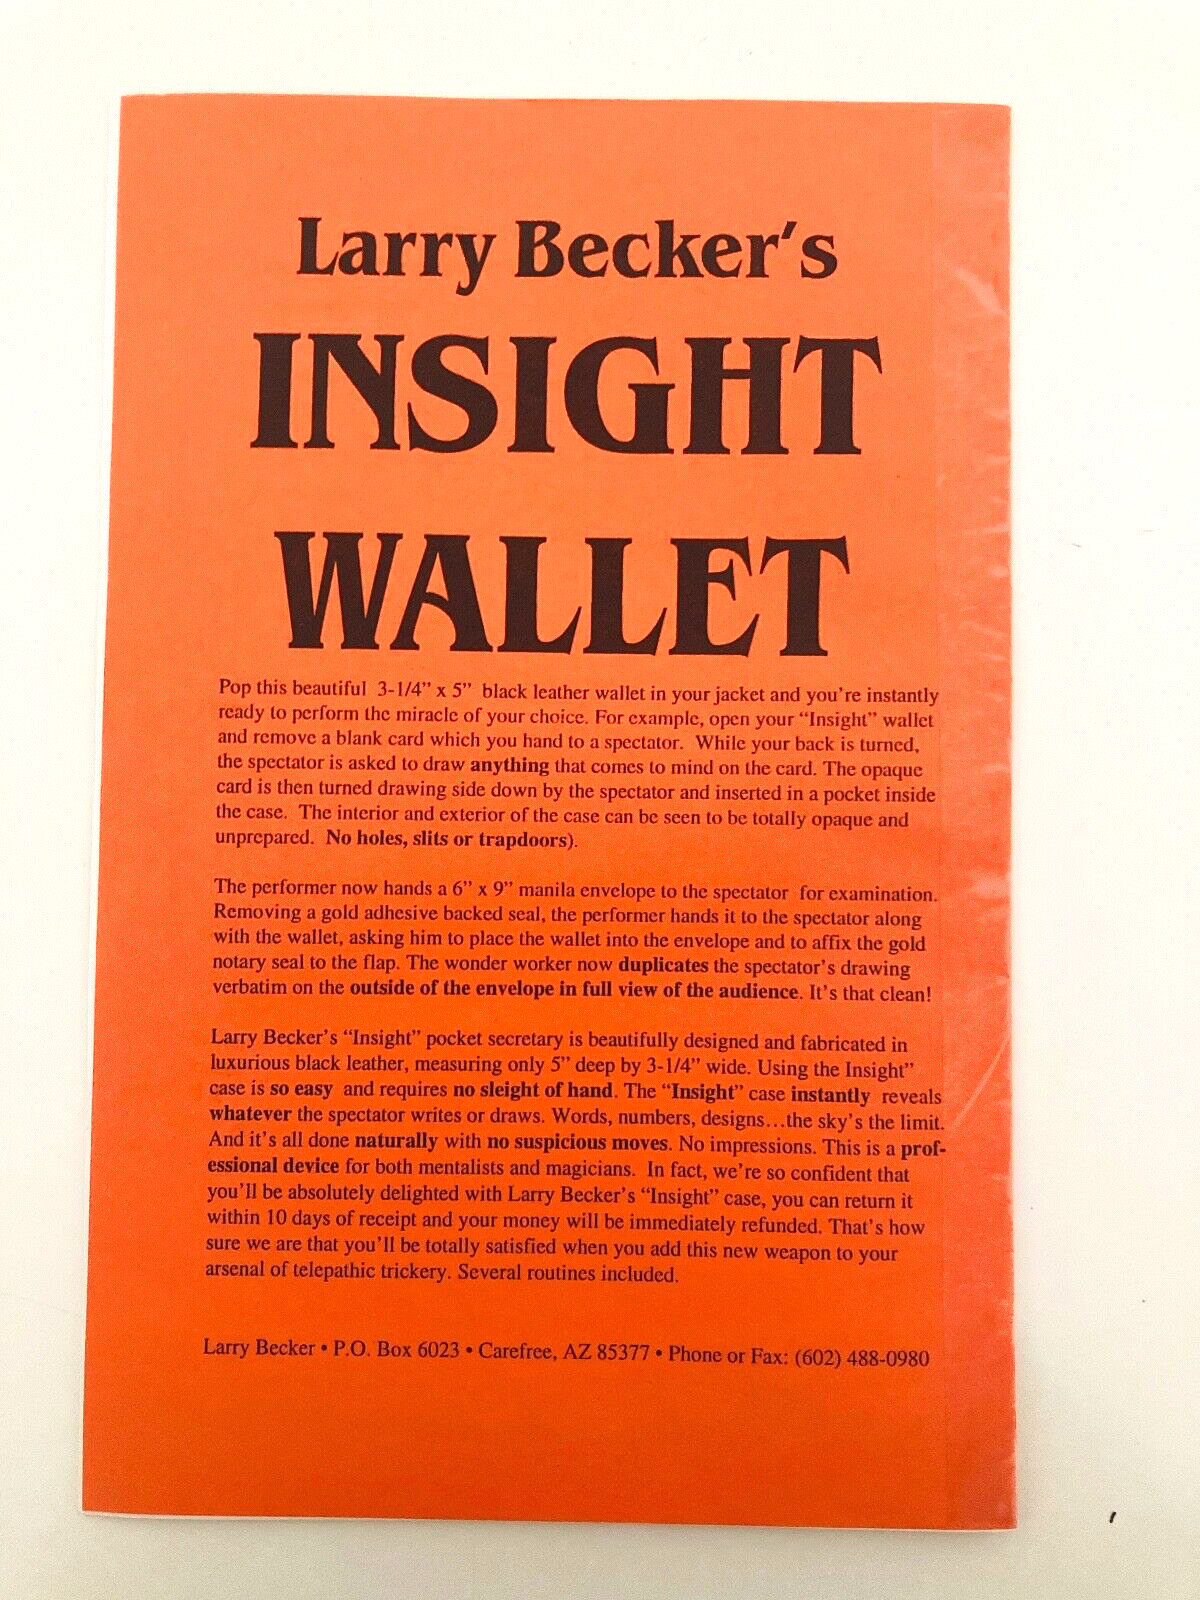 Larry Becker Insight Wallet Booklet rear view